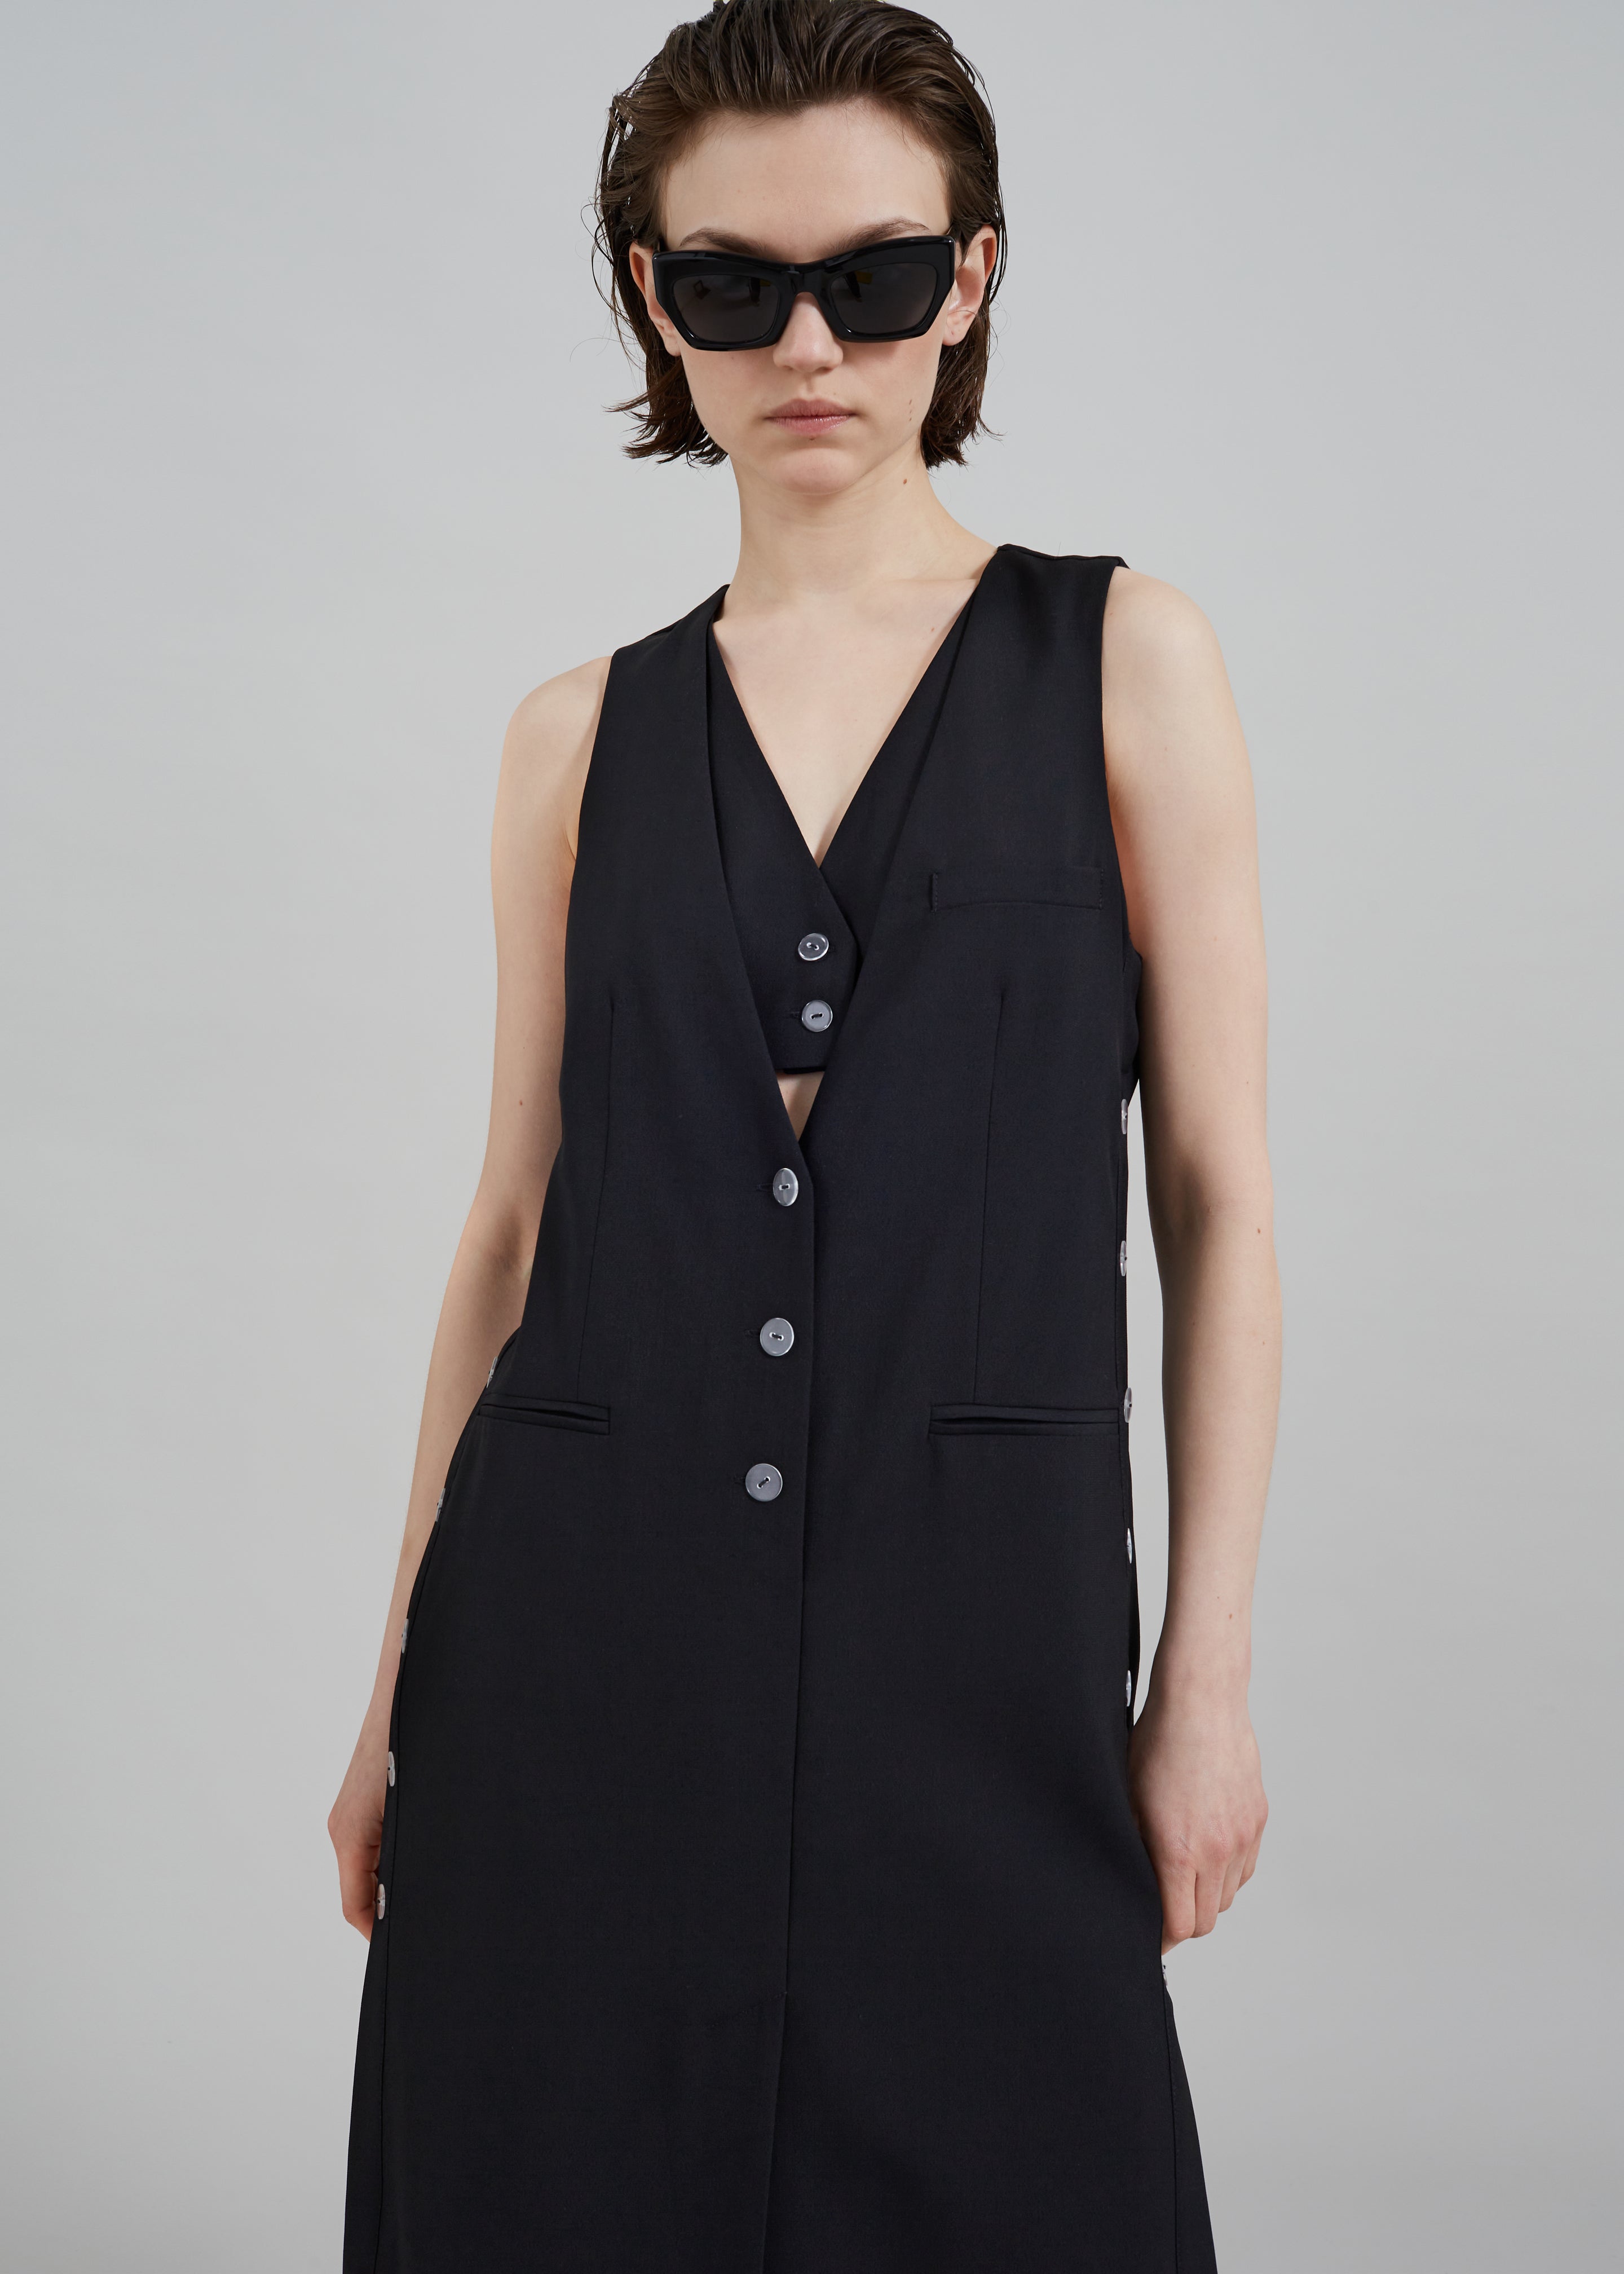 3.1 Phillip Lim Tailored Vest Dress with Set-In Bra - Black - 1